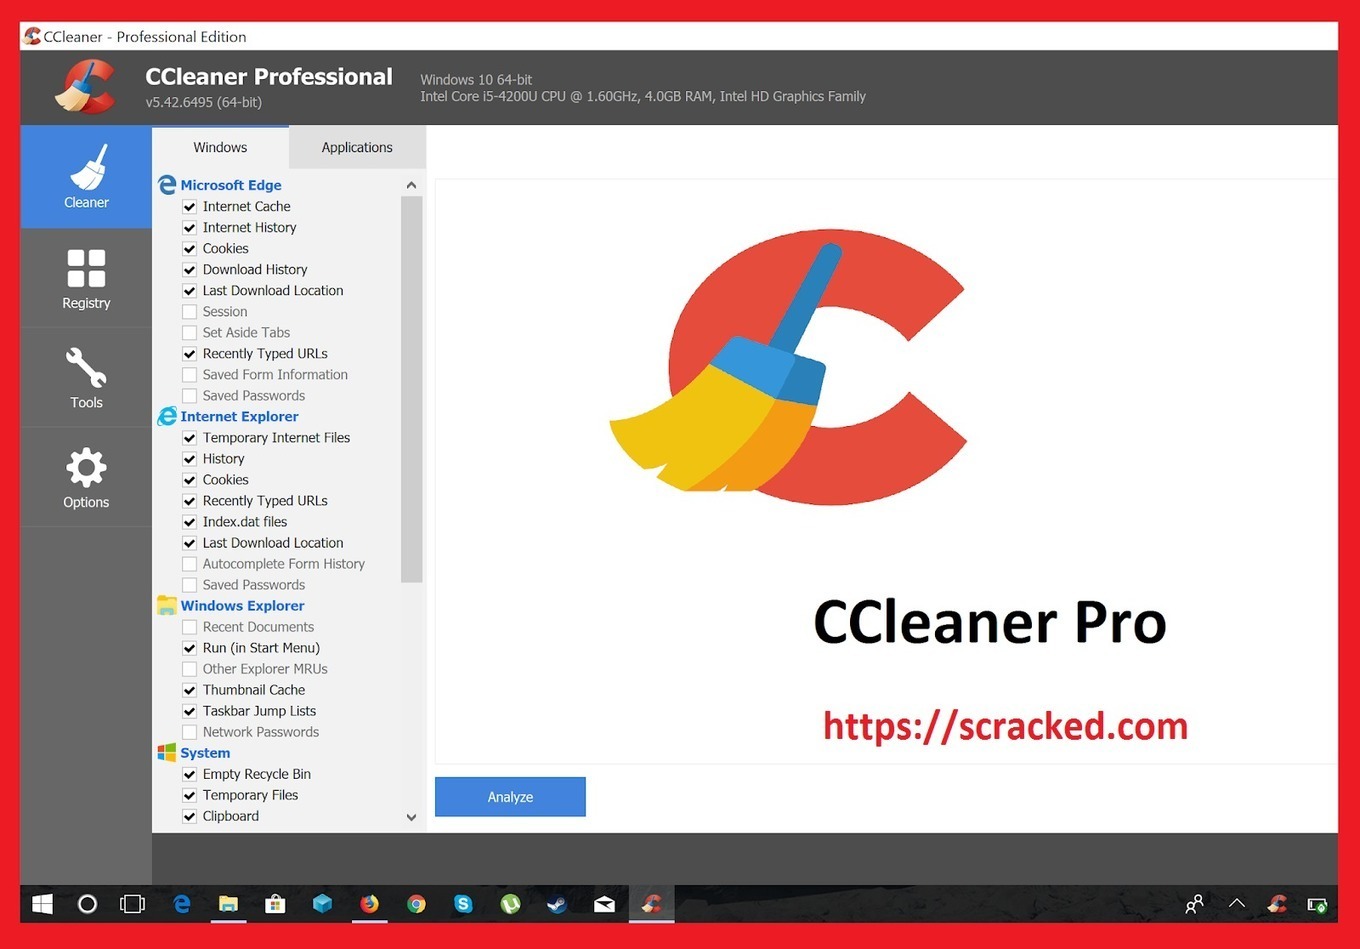 ccleaner professional torrent download